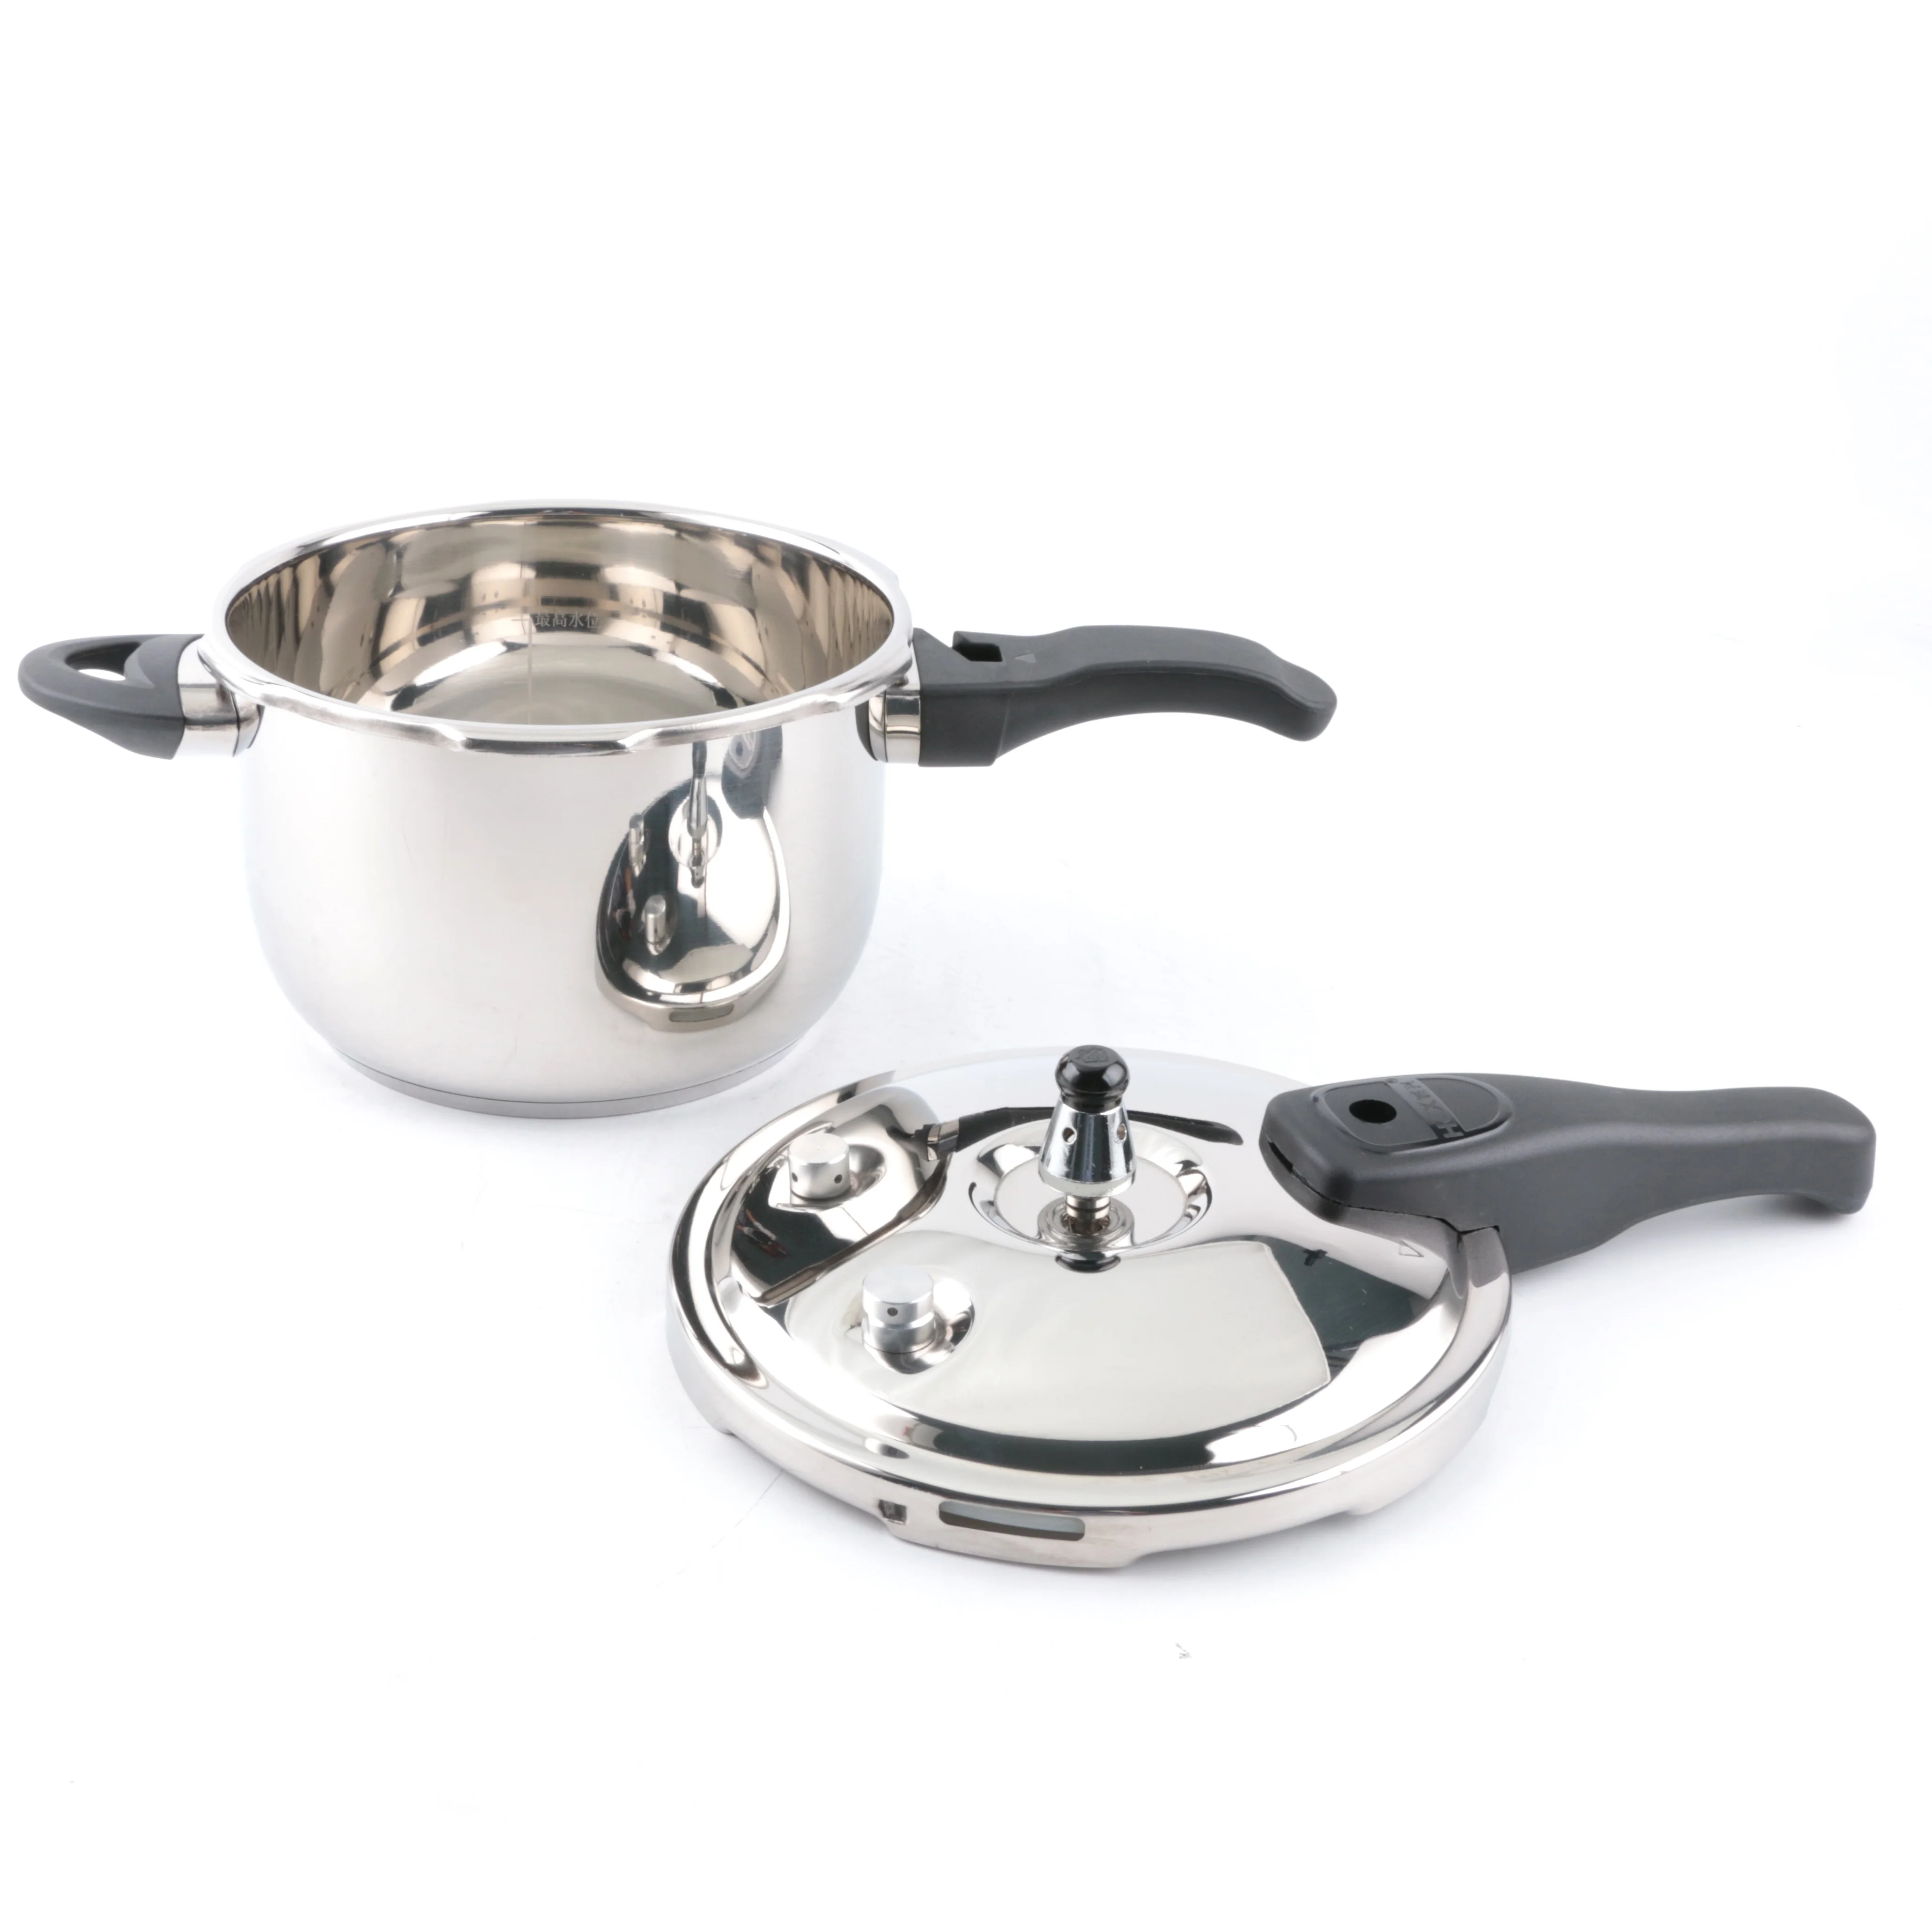 Yuantai hot selling OEM/ODM 201 stainless steel pressure cooker pressure pot